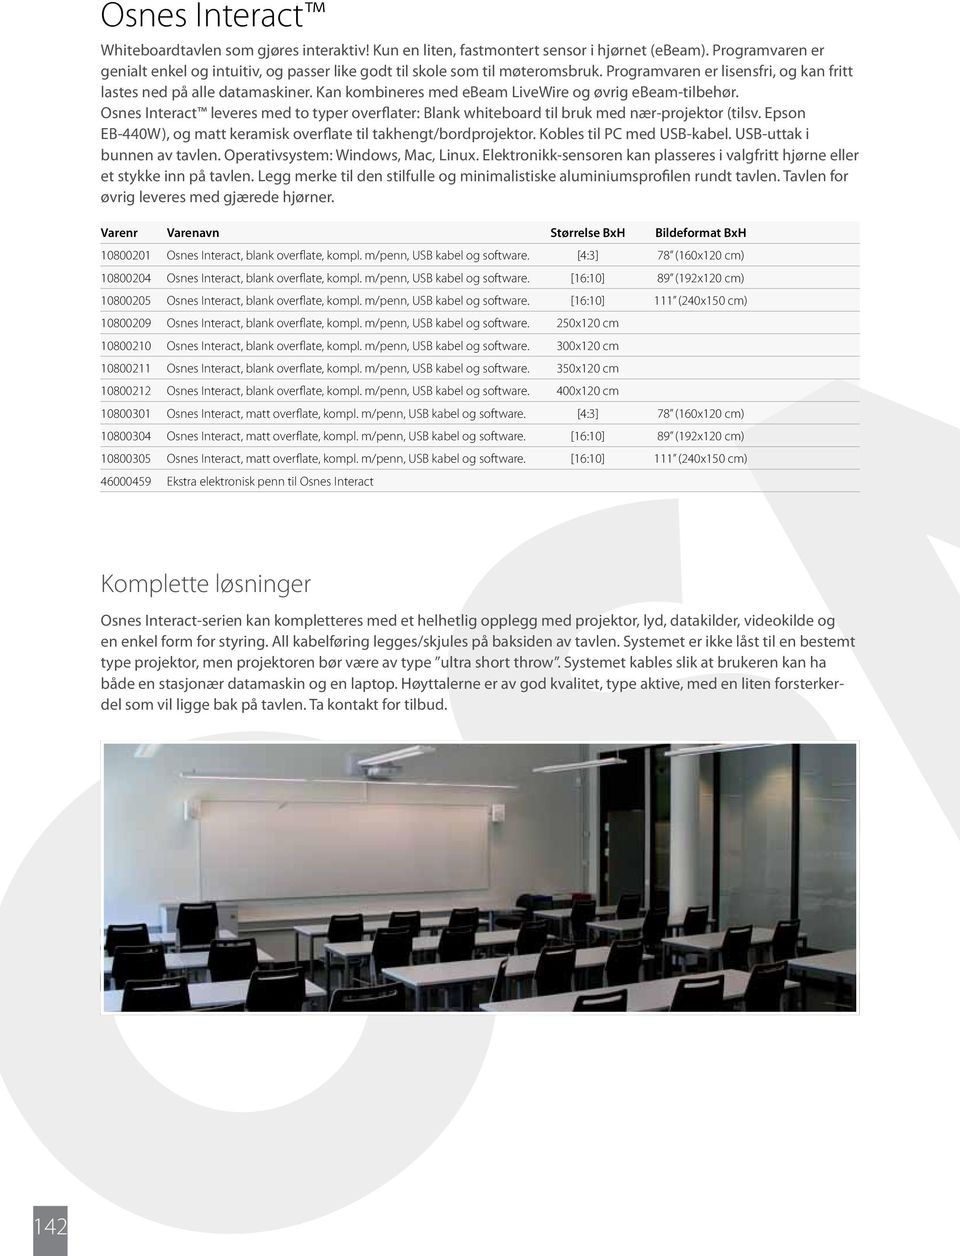 Kan kombineres med ebeam LiveWire og øvrig ebeam-tilbehør. Osnes Interact leveres med to typer overflater: Blank whiteboard til bruk med nær-projektor (tilsv.